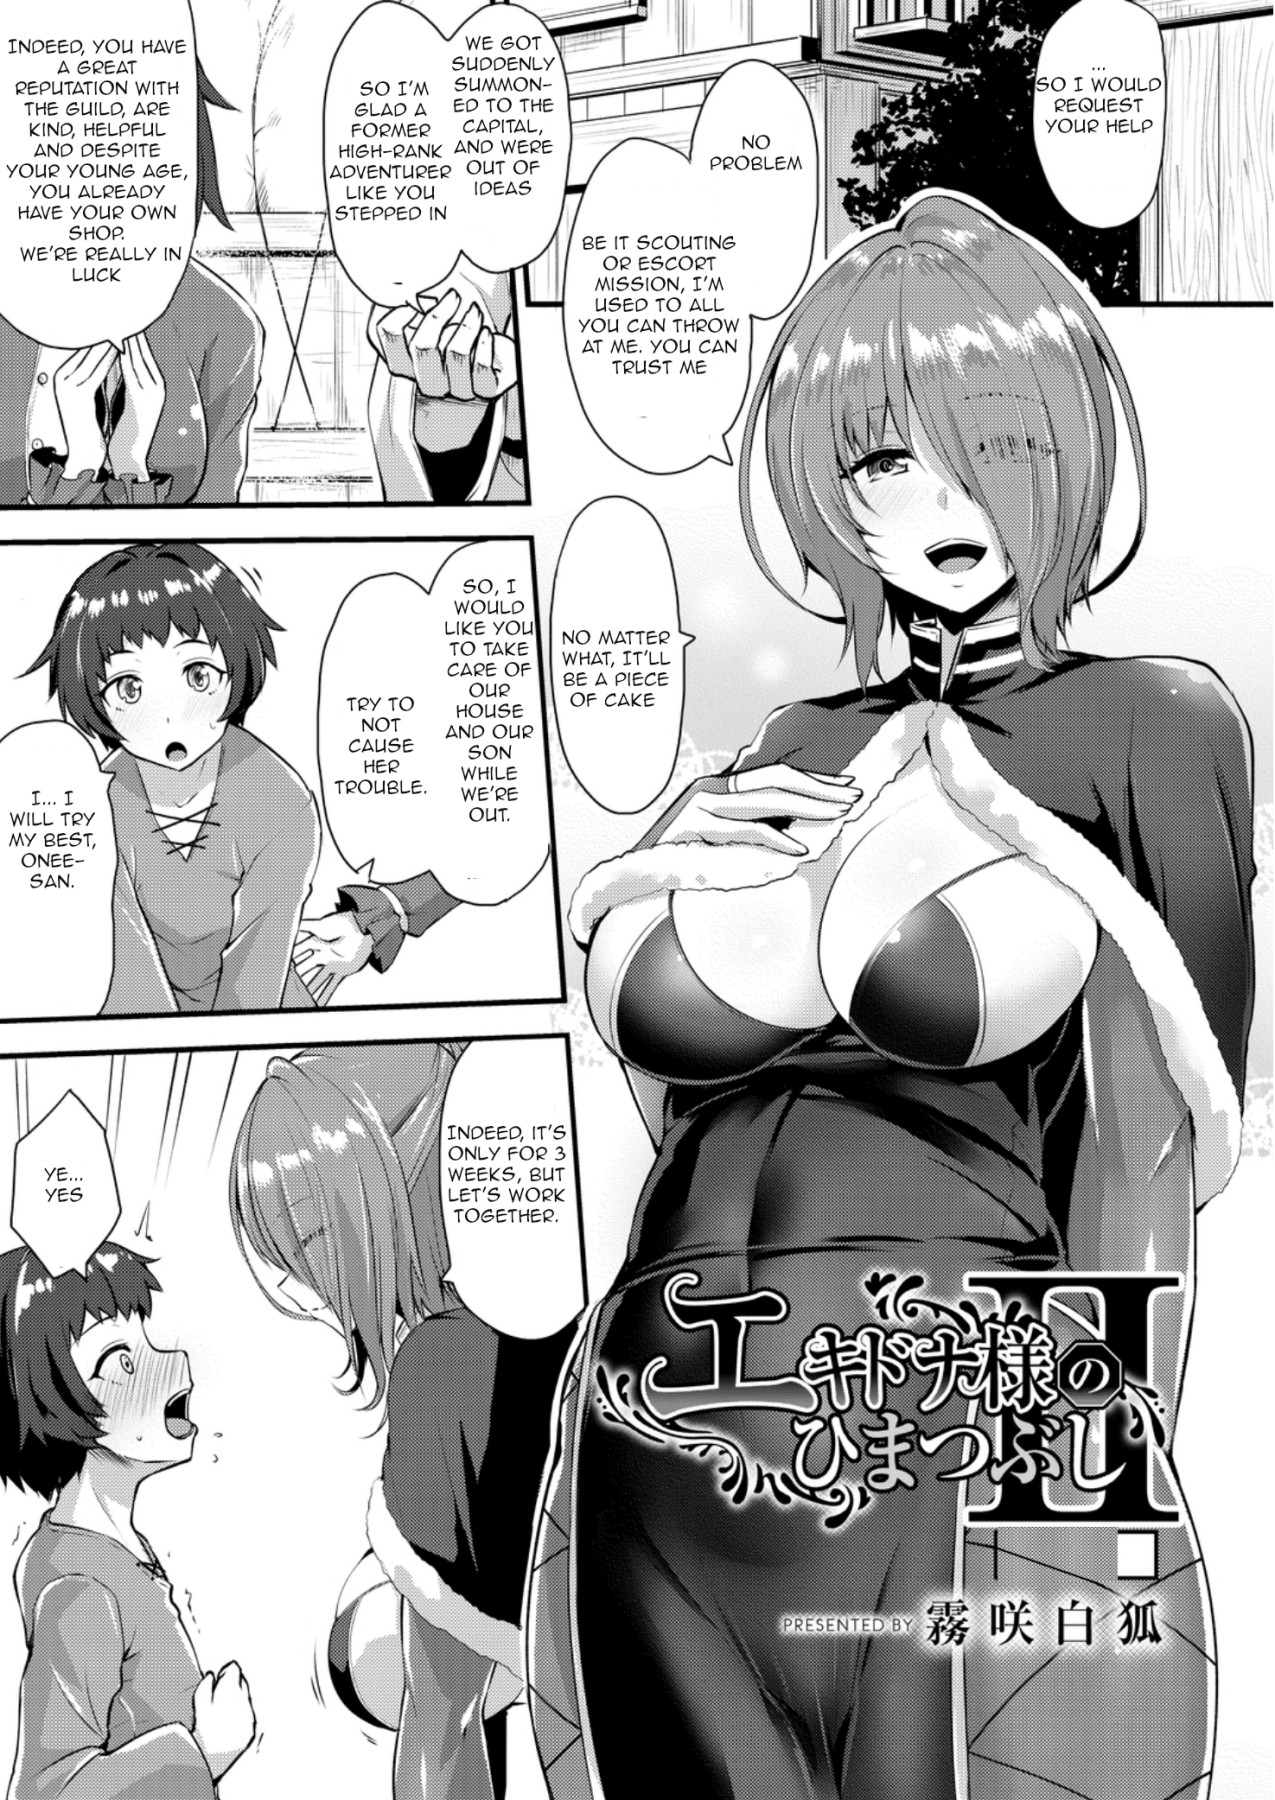 Hentai Manga Comic-Echidna-sama's Way To Kill Time 2-Chapter 2-1